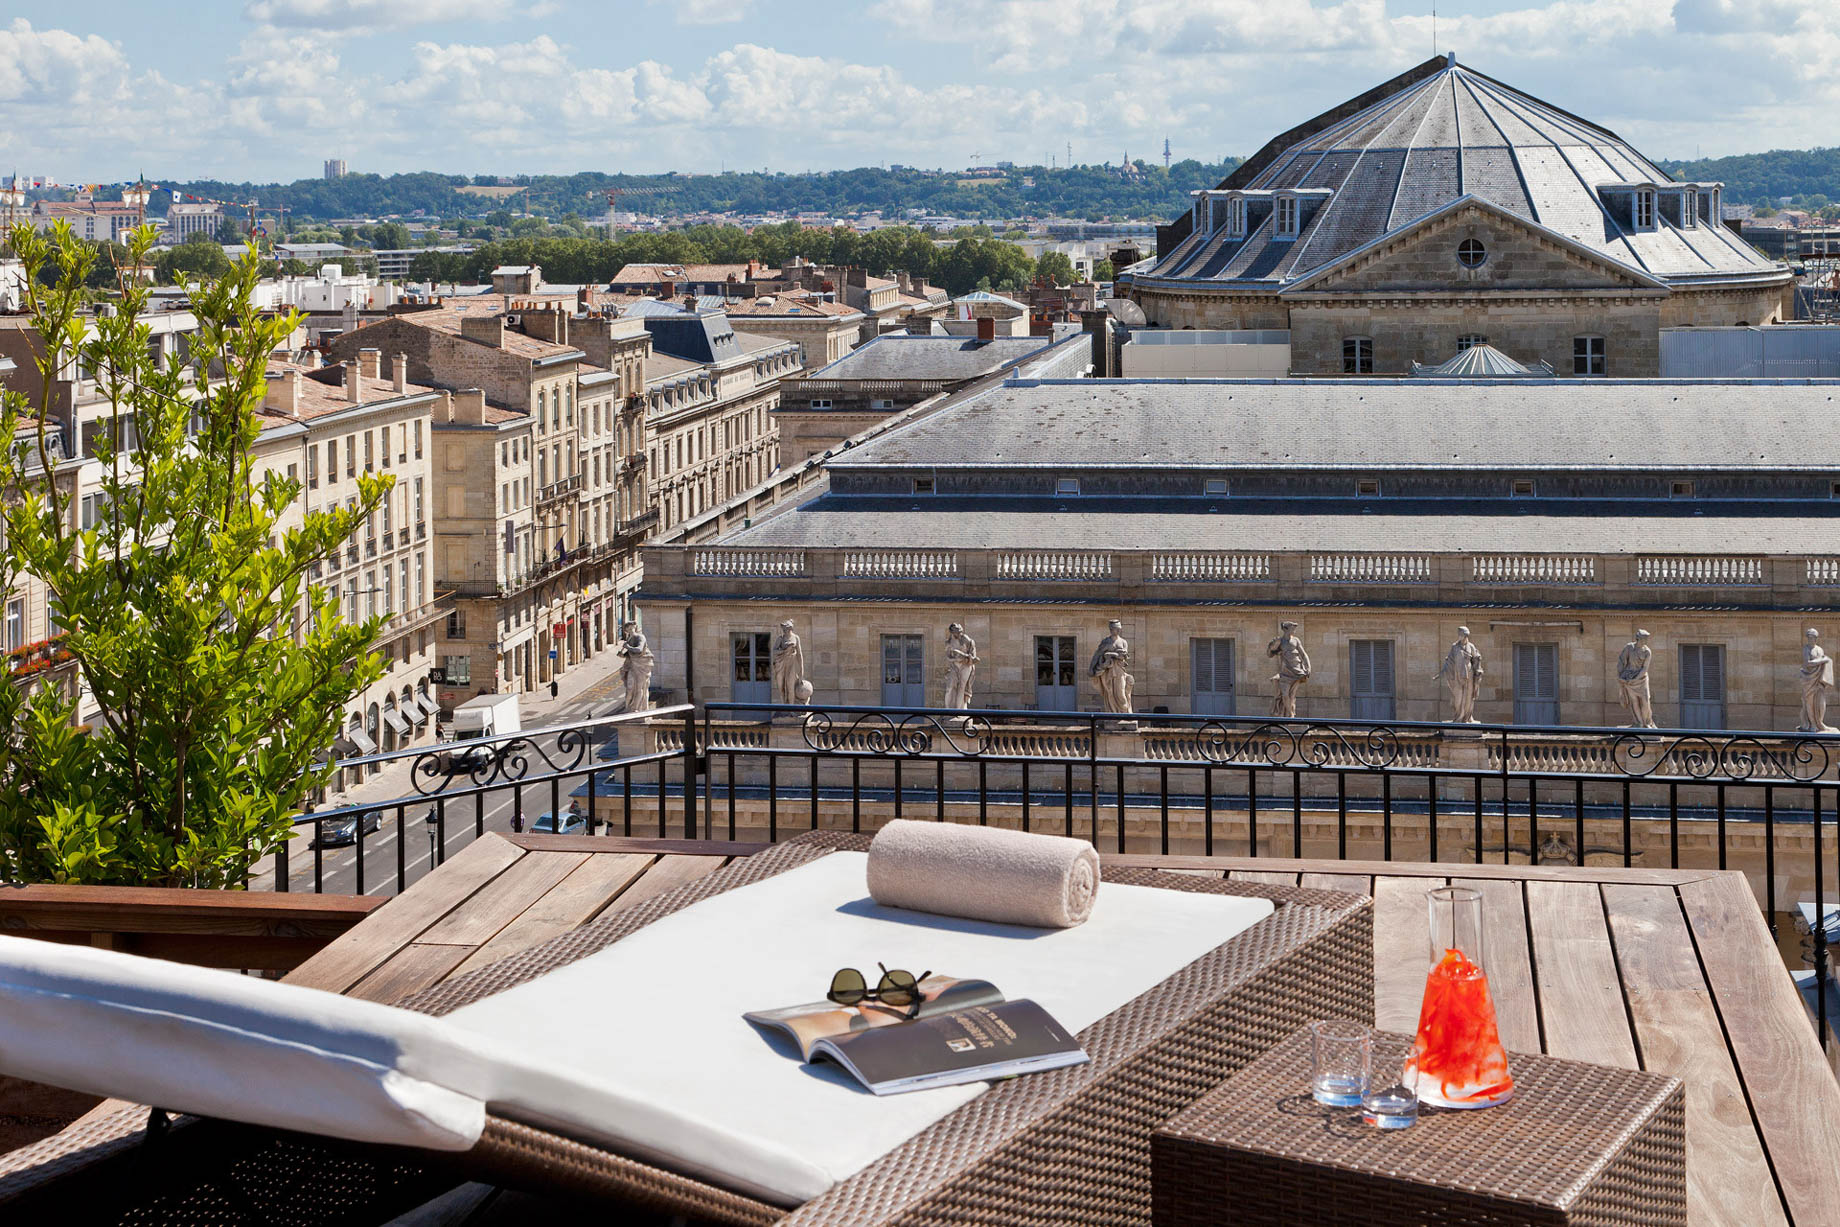 InterContinental Bordeaux Le Grand Hotel – Bordeaux, France – Rooftop Relaxation